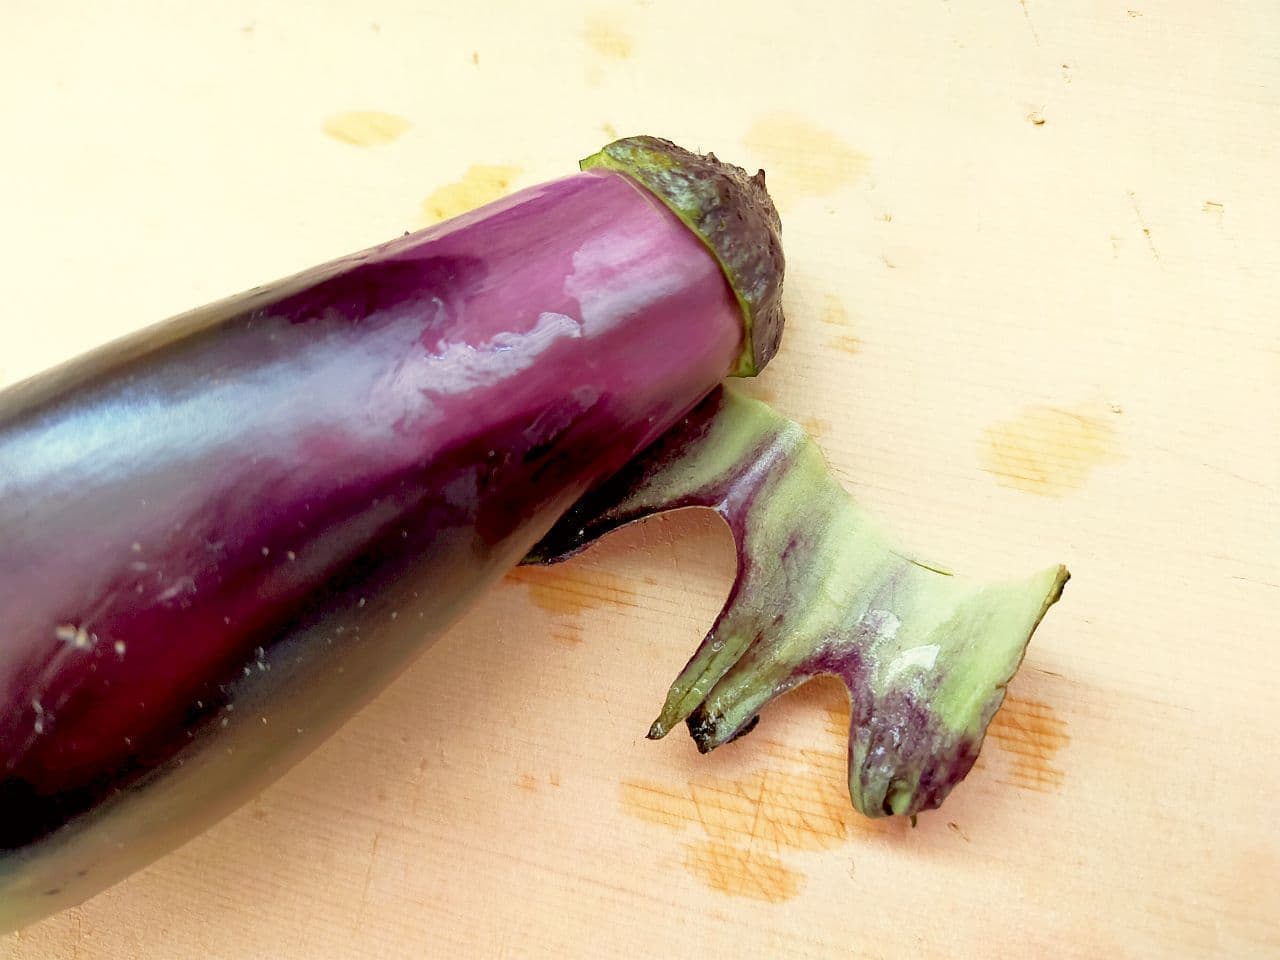 Step 2: How to prepare eggplant